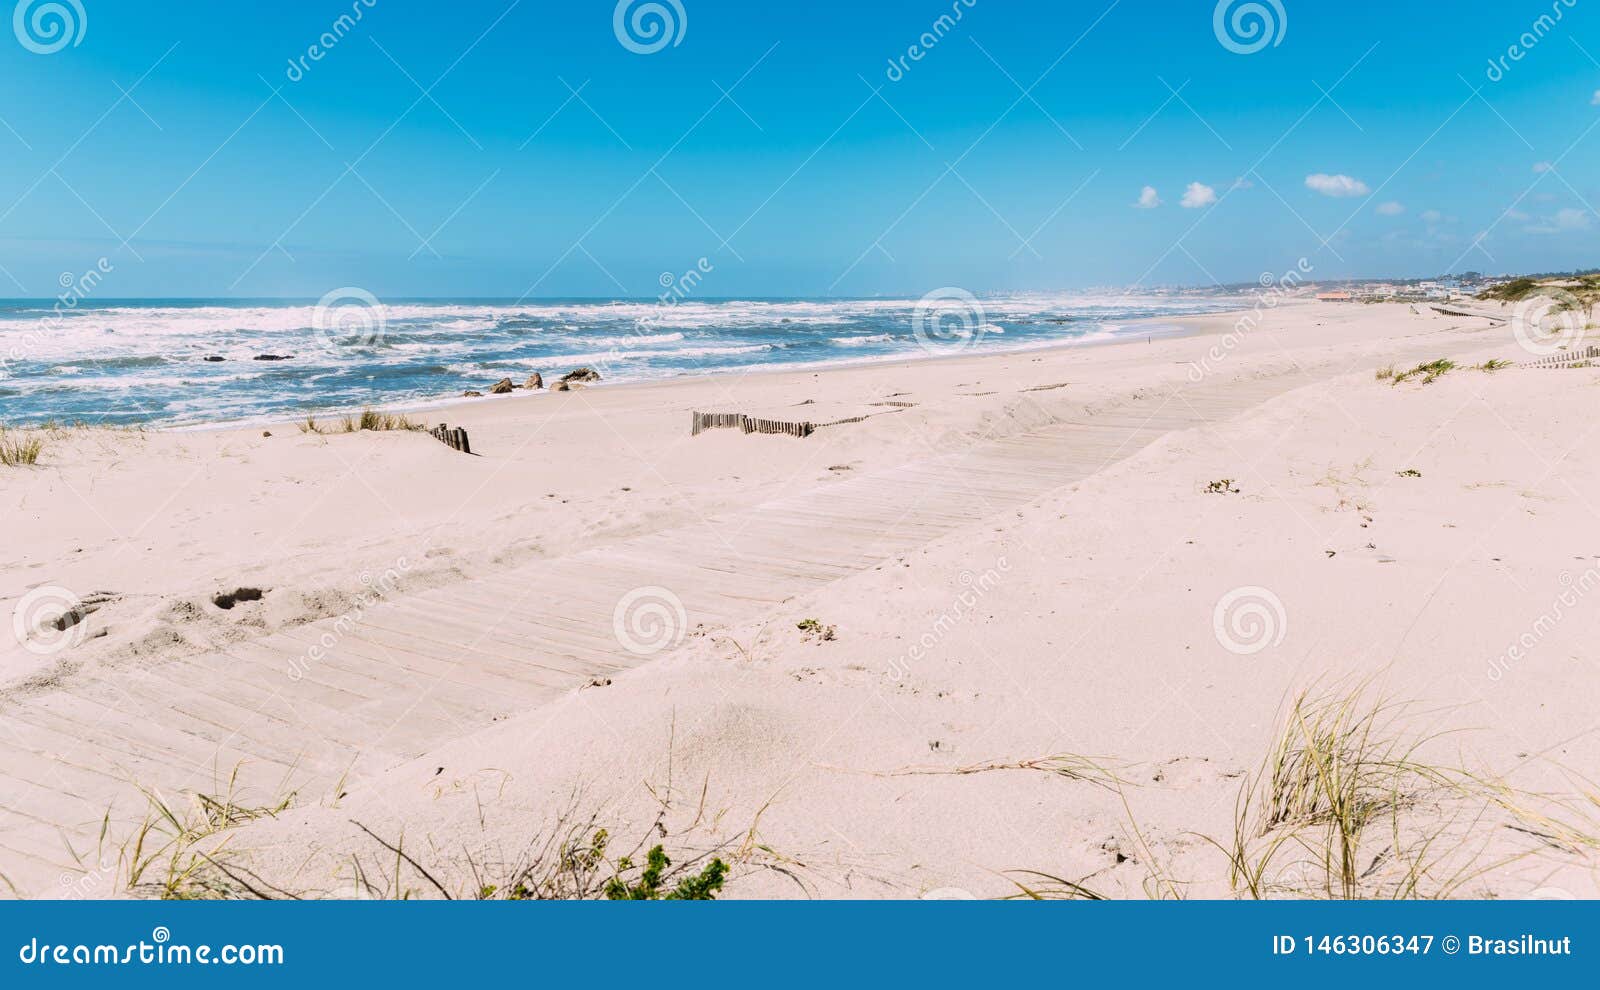 wooden boardwalk at the praia da frente azul, in english the blue beach front in the seaside resort espinho